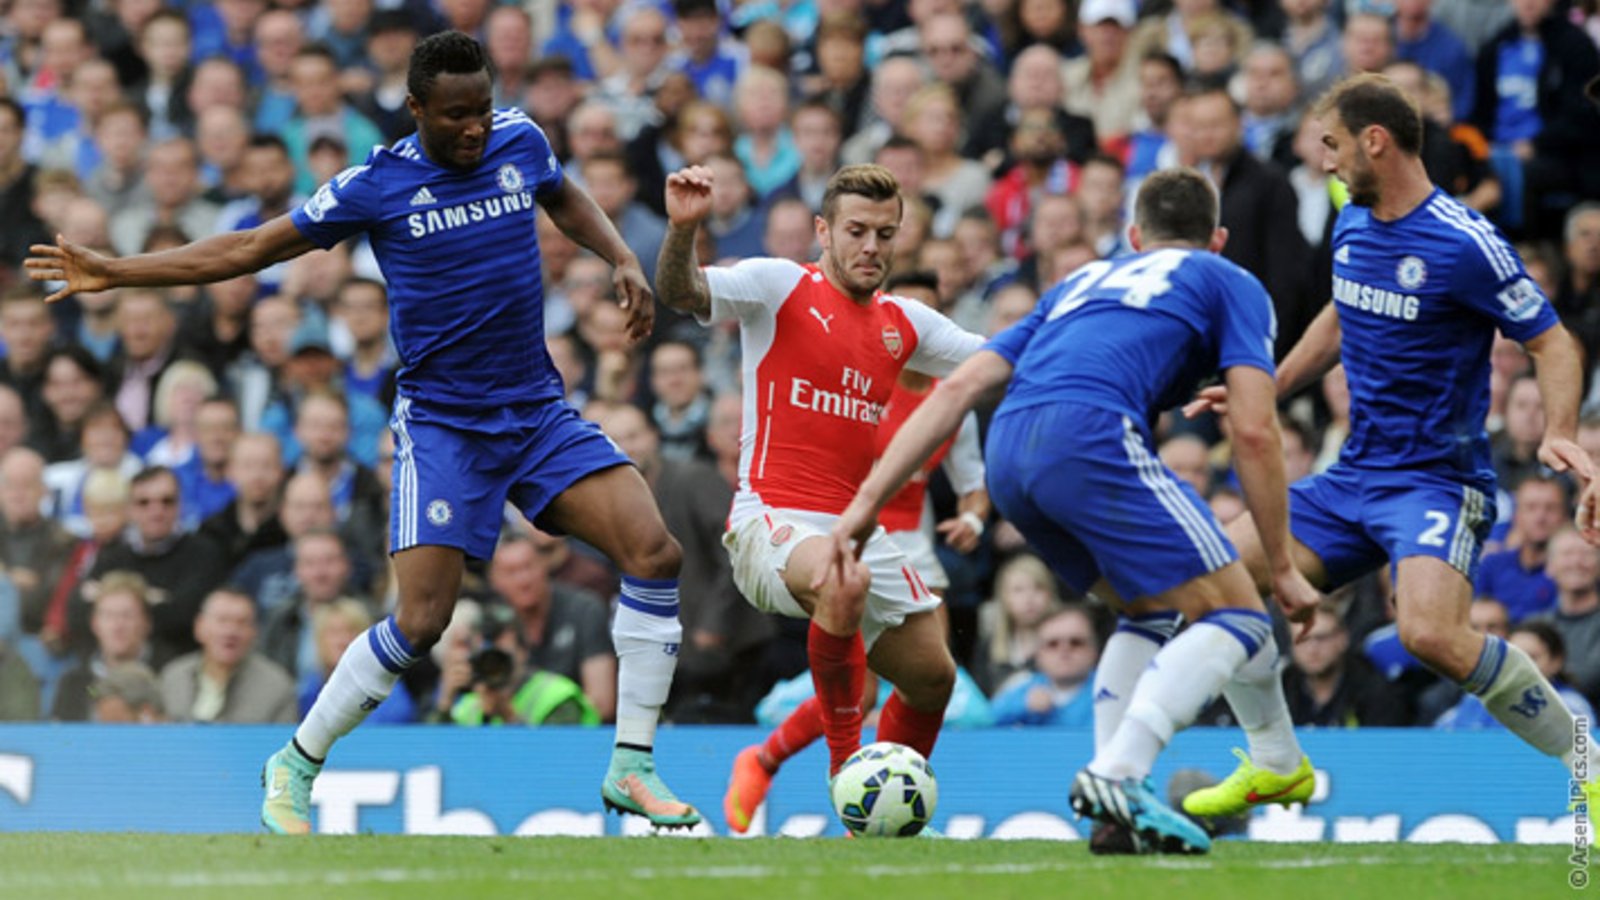 Chelsea 2 - 0 Arsenal - Match Report | Arsenal.com